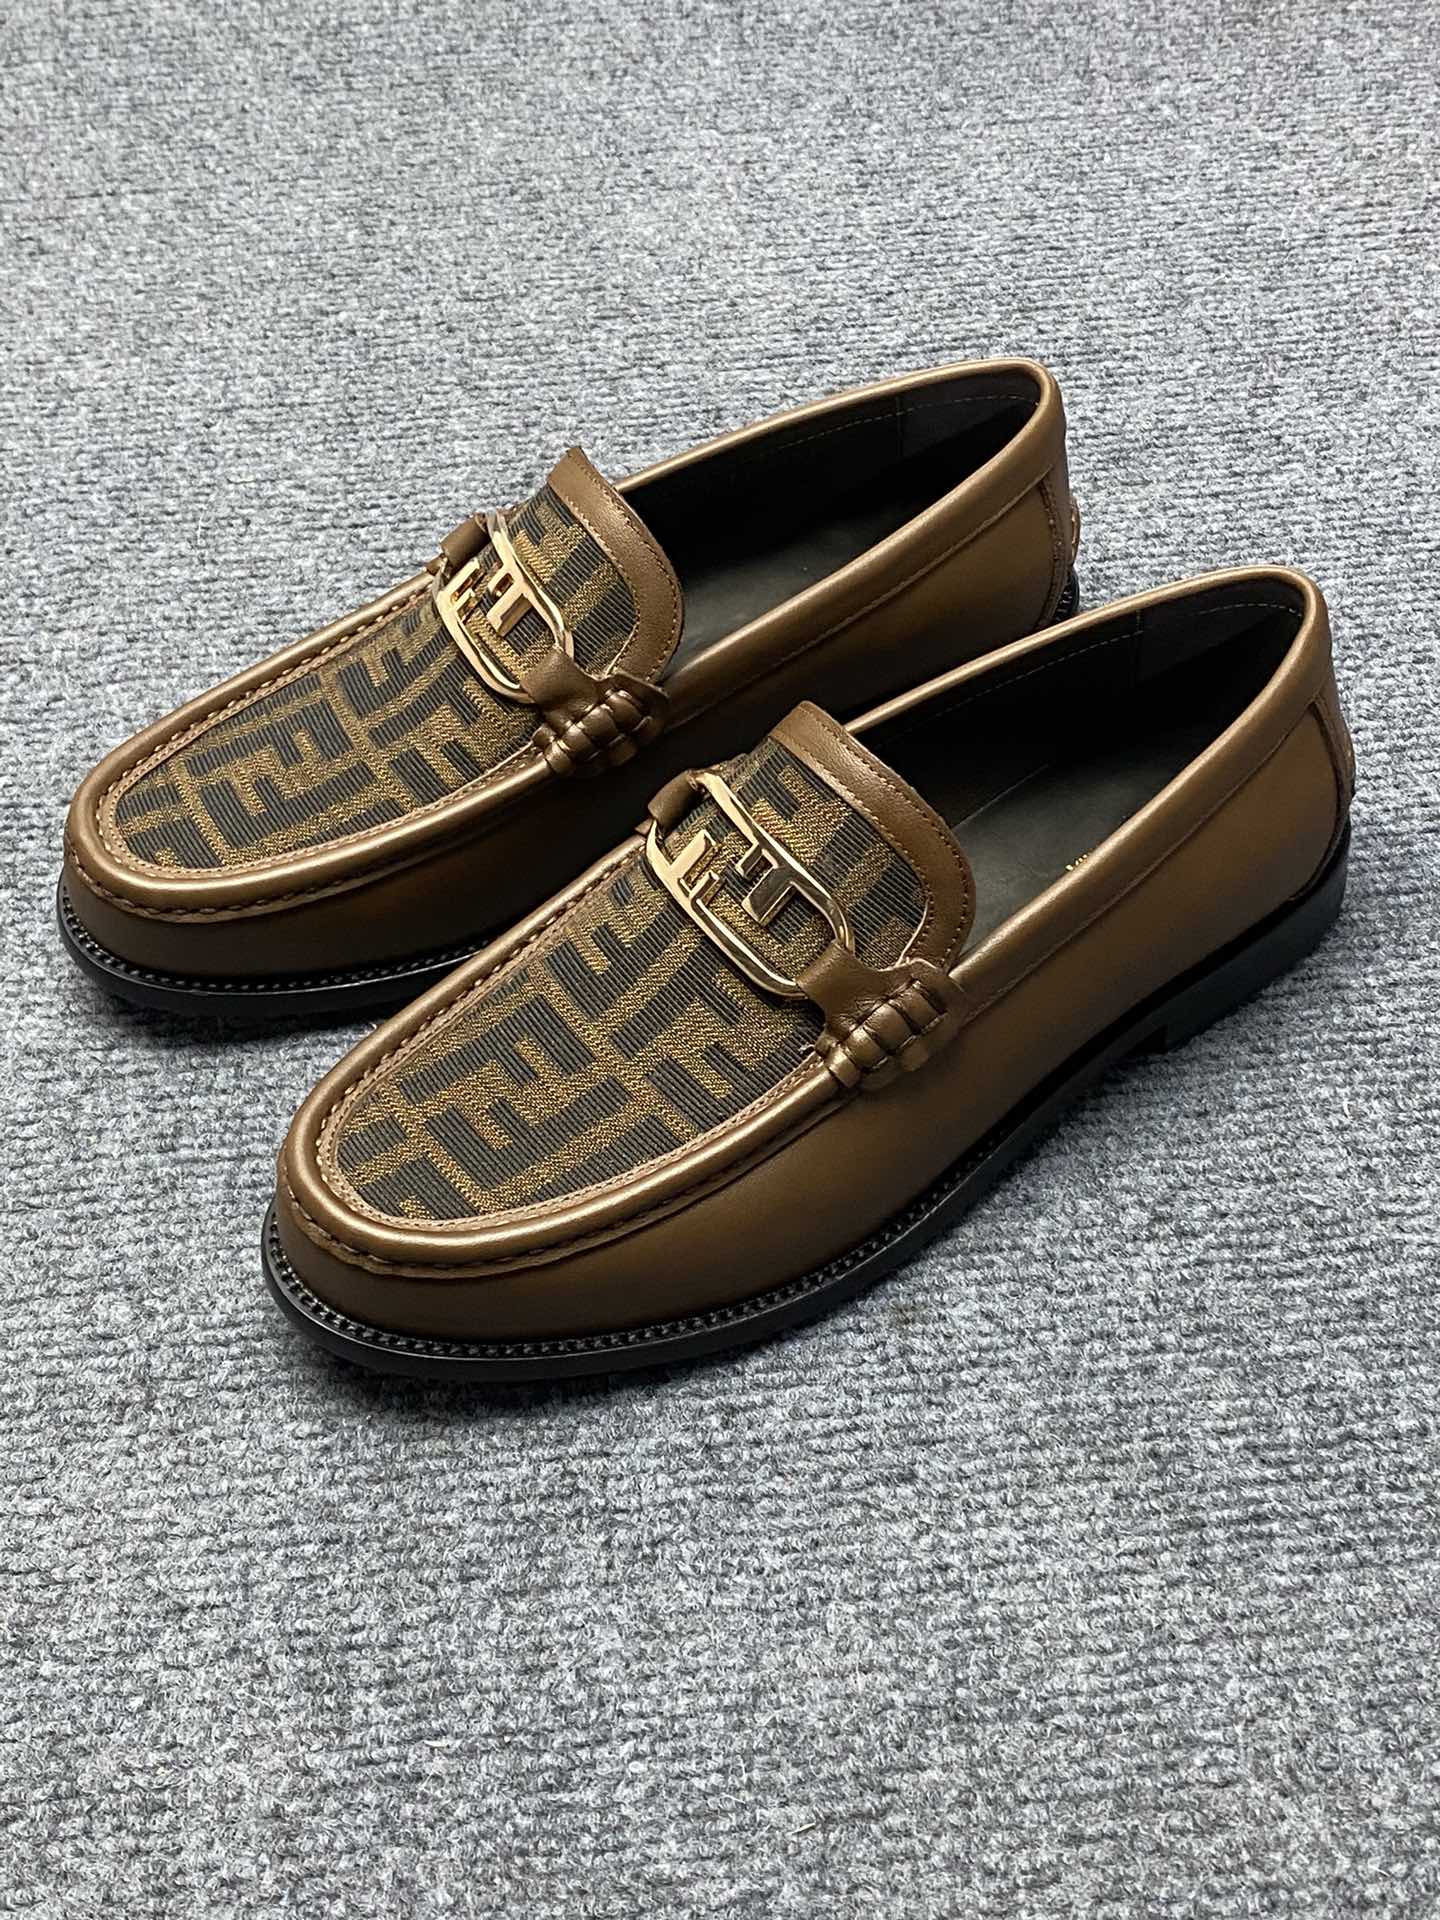 Replica 1:1 High Quality Fendi Shoes Plain Toe Men Cowhide Genuine Leather